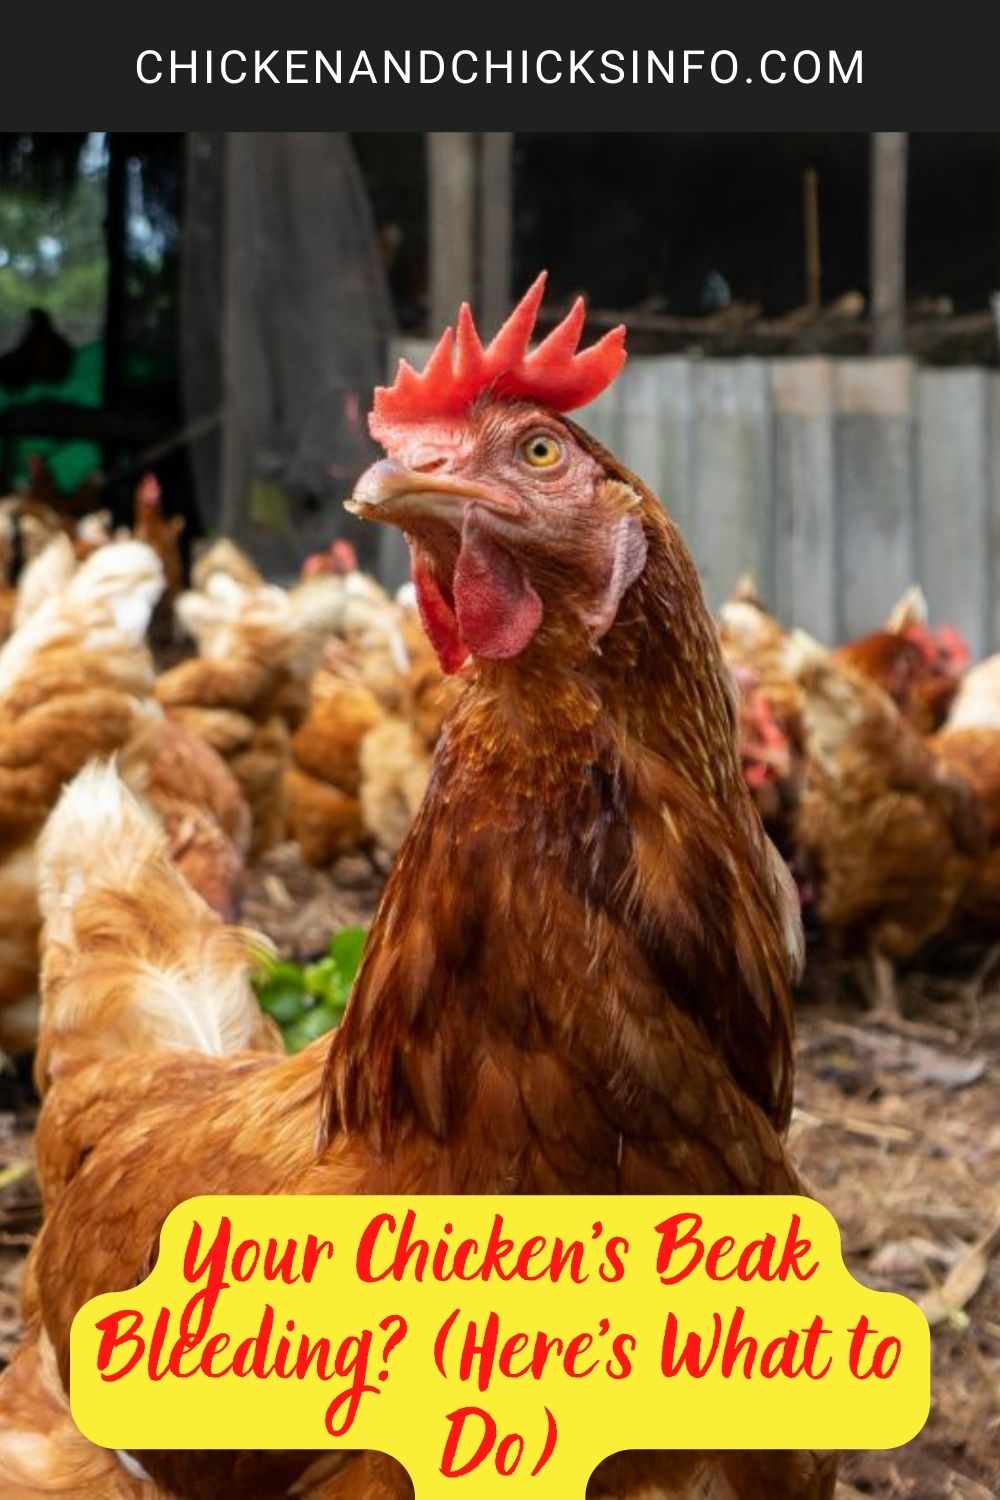 Your Chicken's Beak Bleeding? (Here’s What to Do) poster.